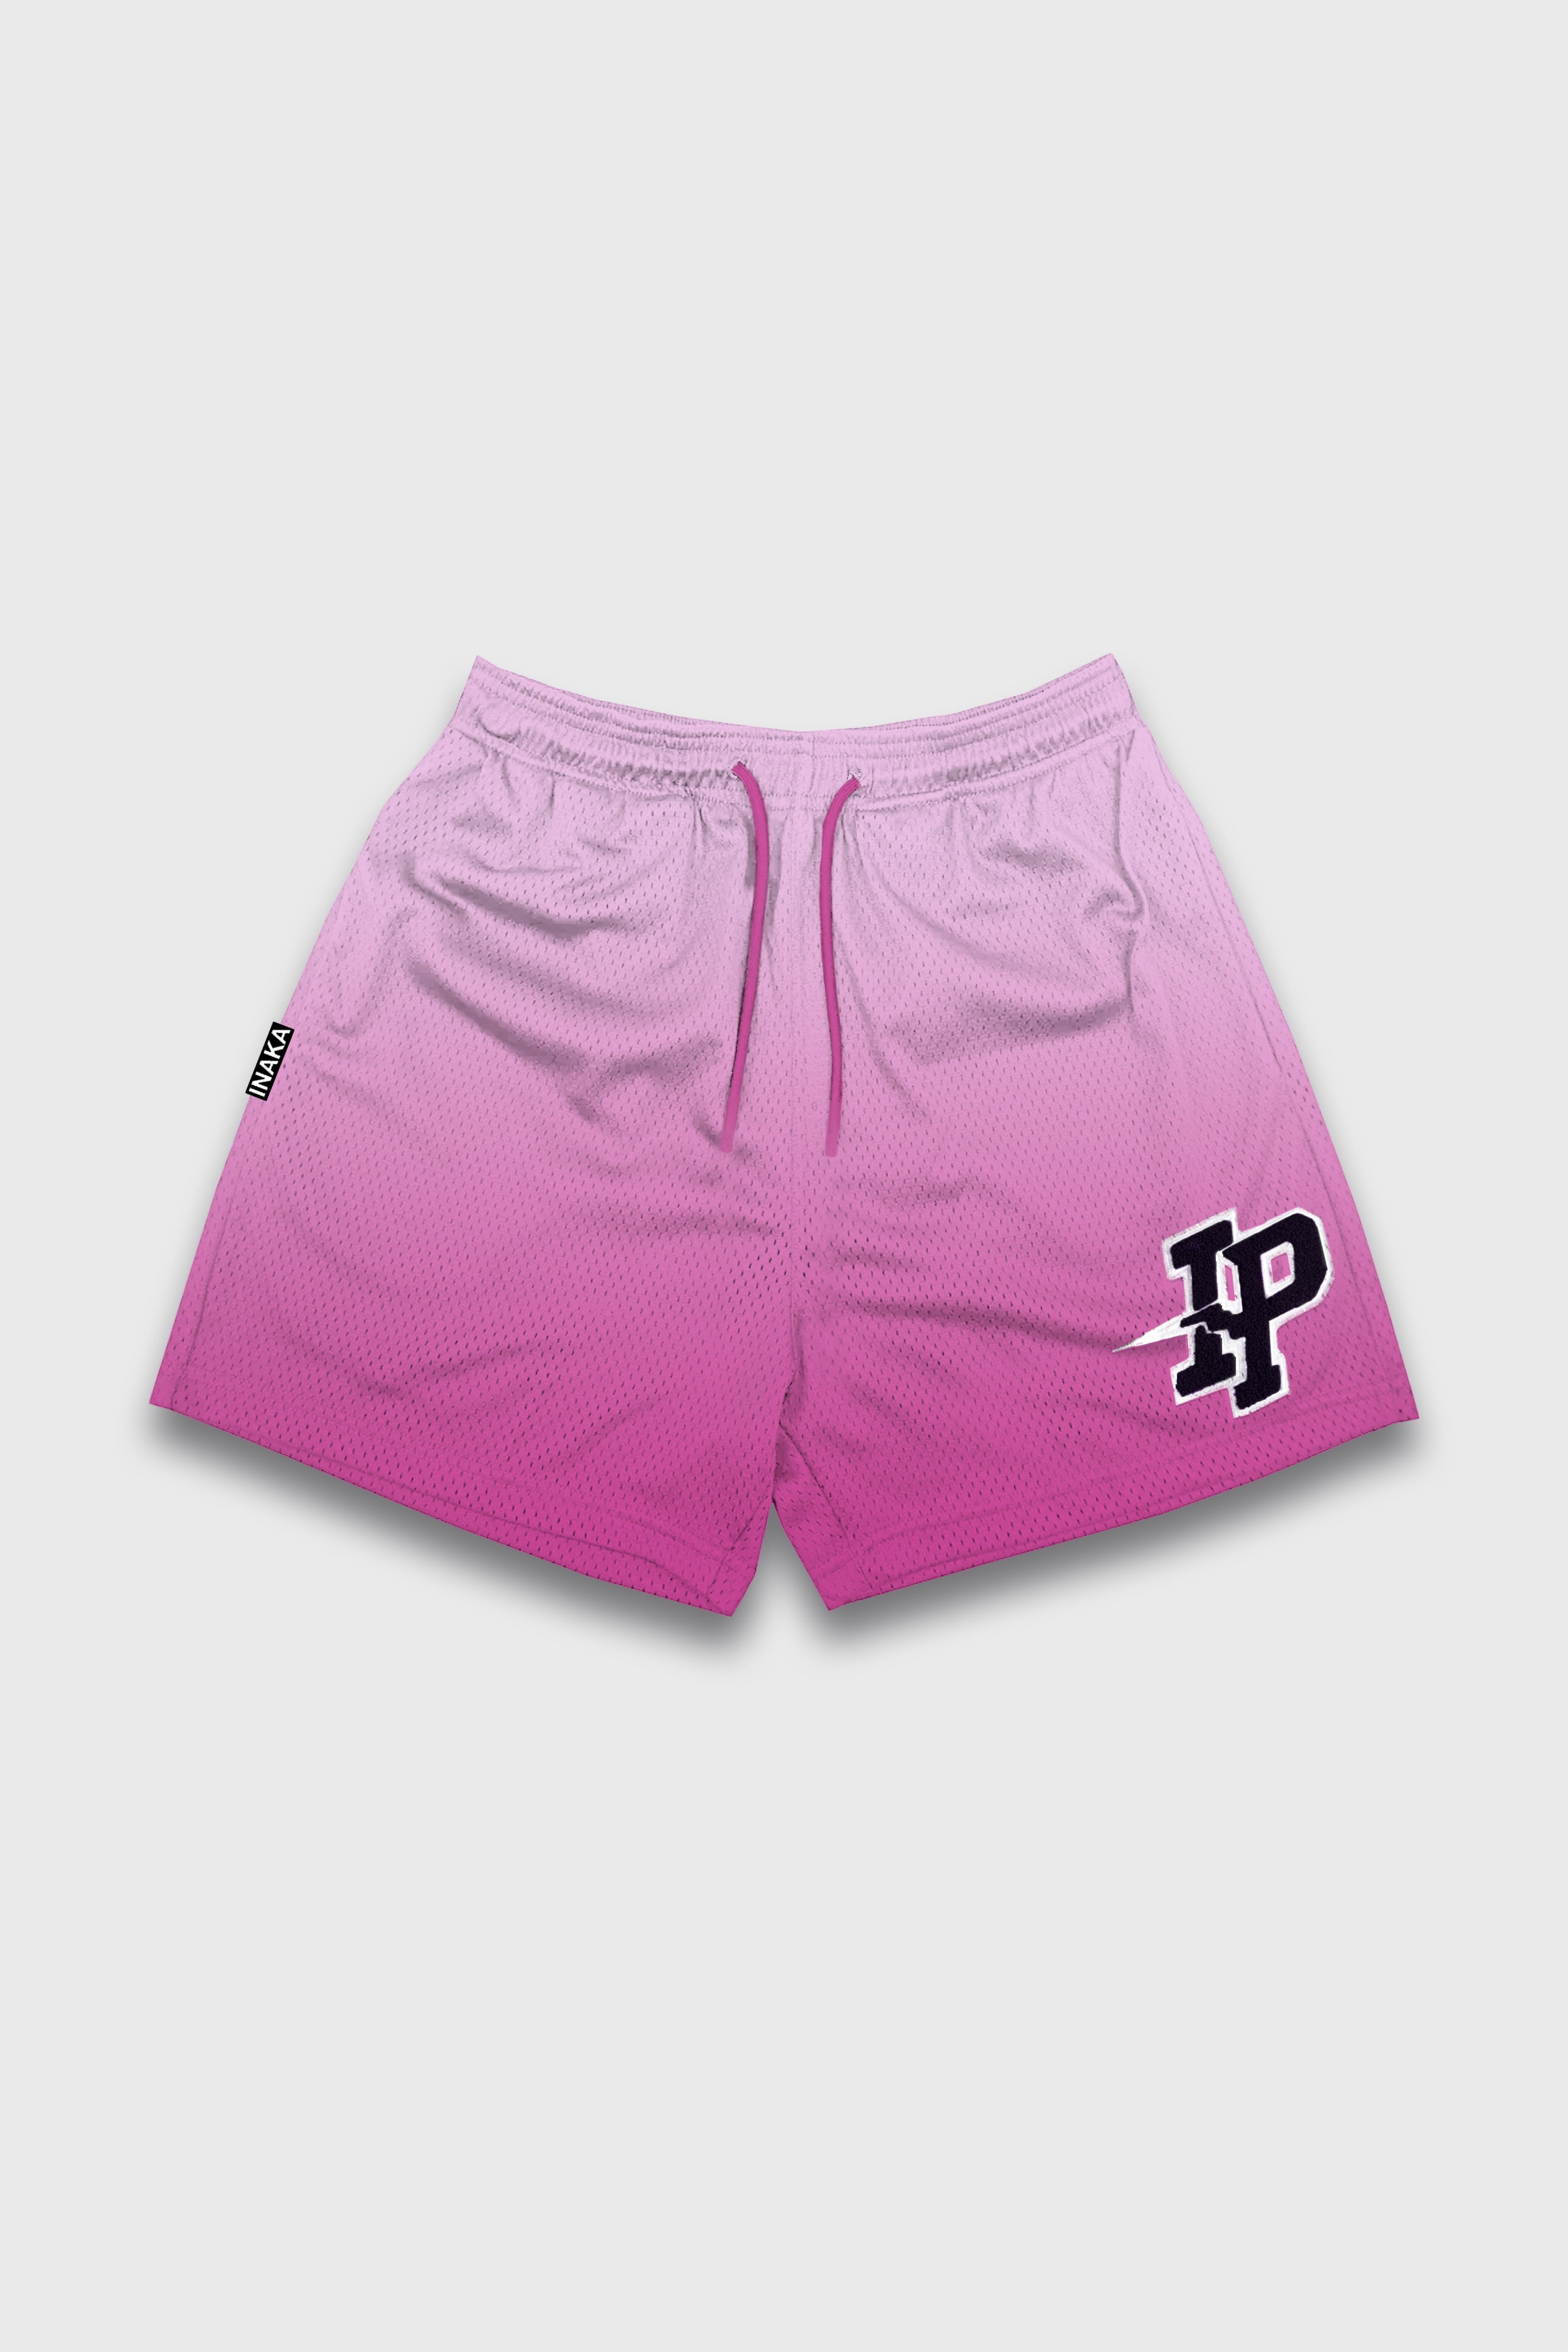 Men's Graphic Mesh Shorts - Pink Gradient